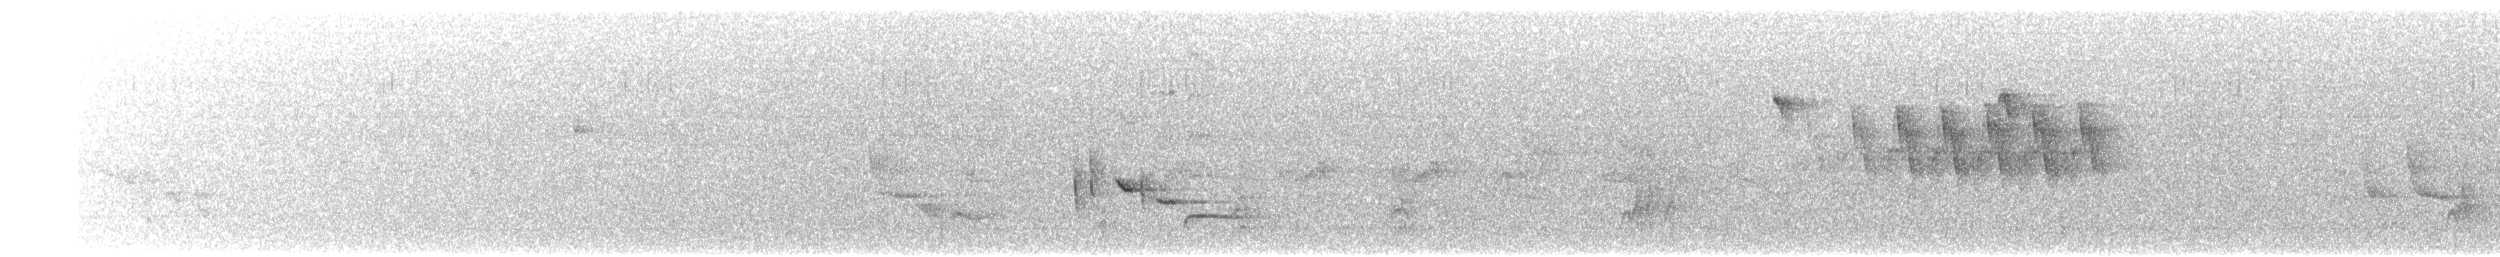 Ak Karınlı Çıtkuşu - ML110107761